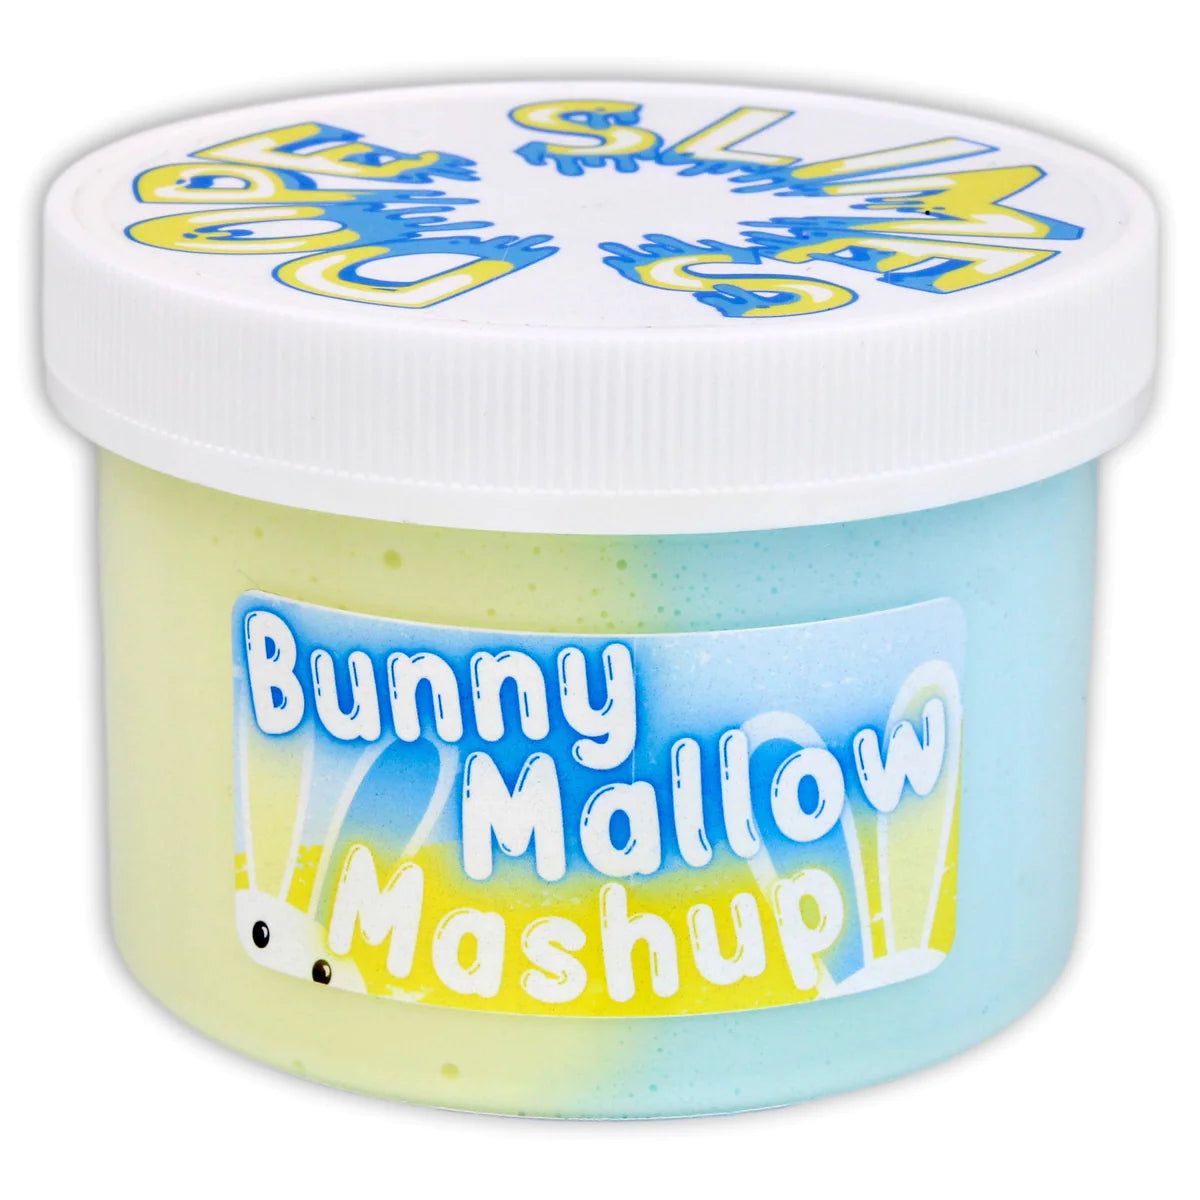 Bunny Mallow Mashup